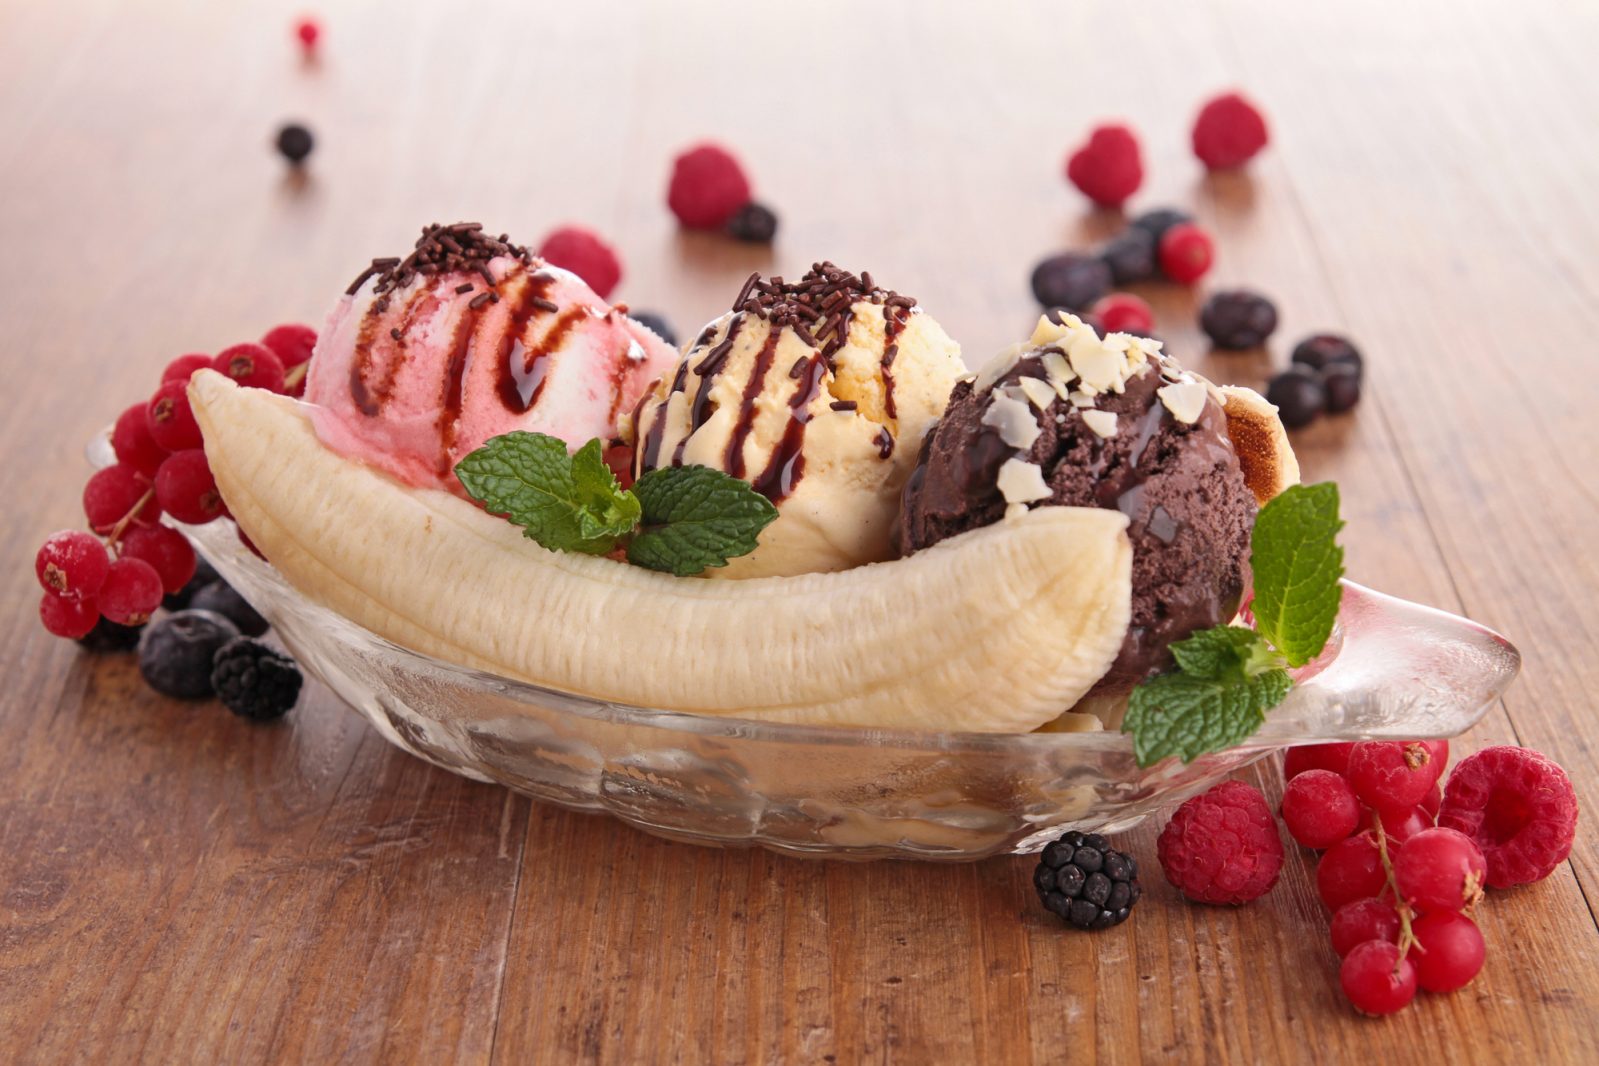 What Dessert Flavor Are You? Banana split